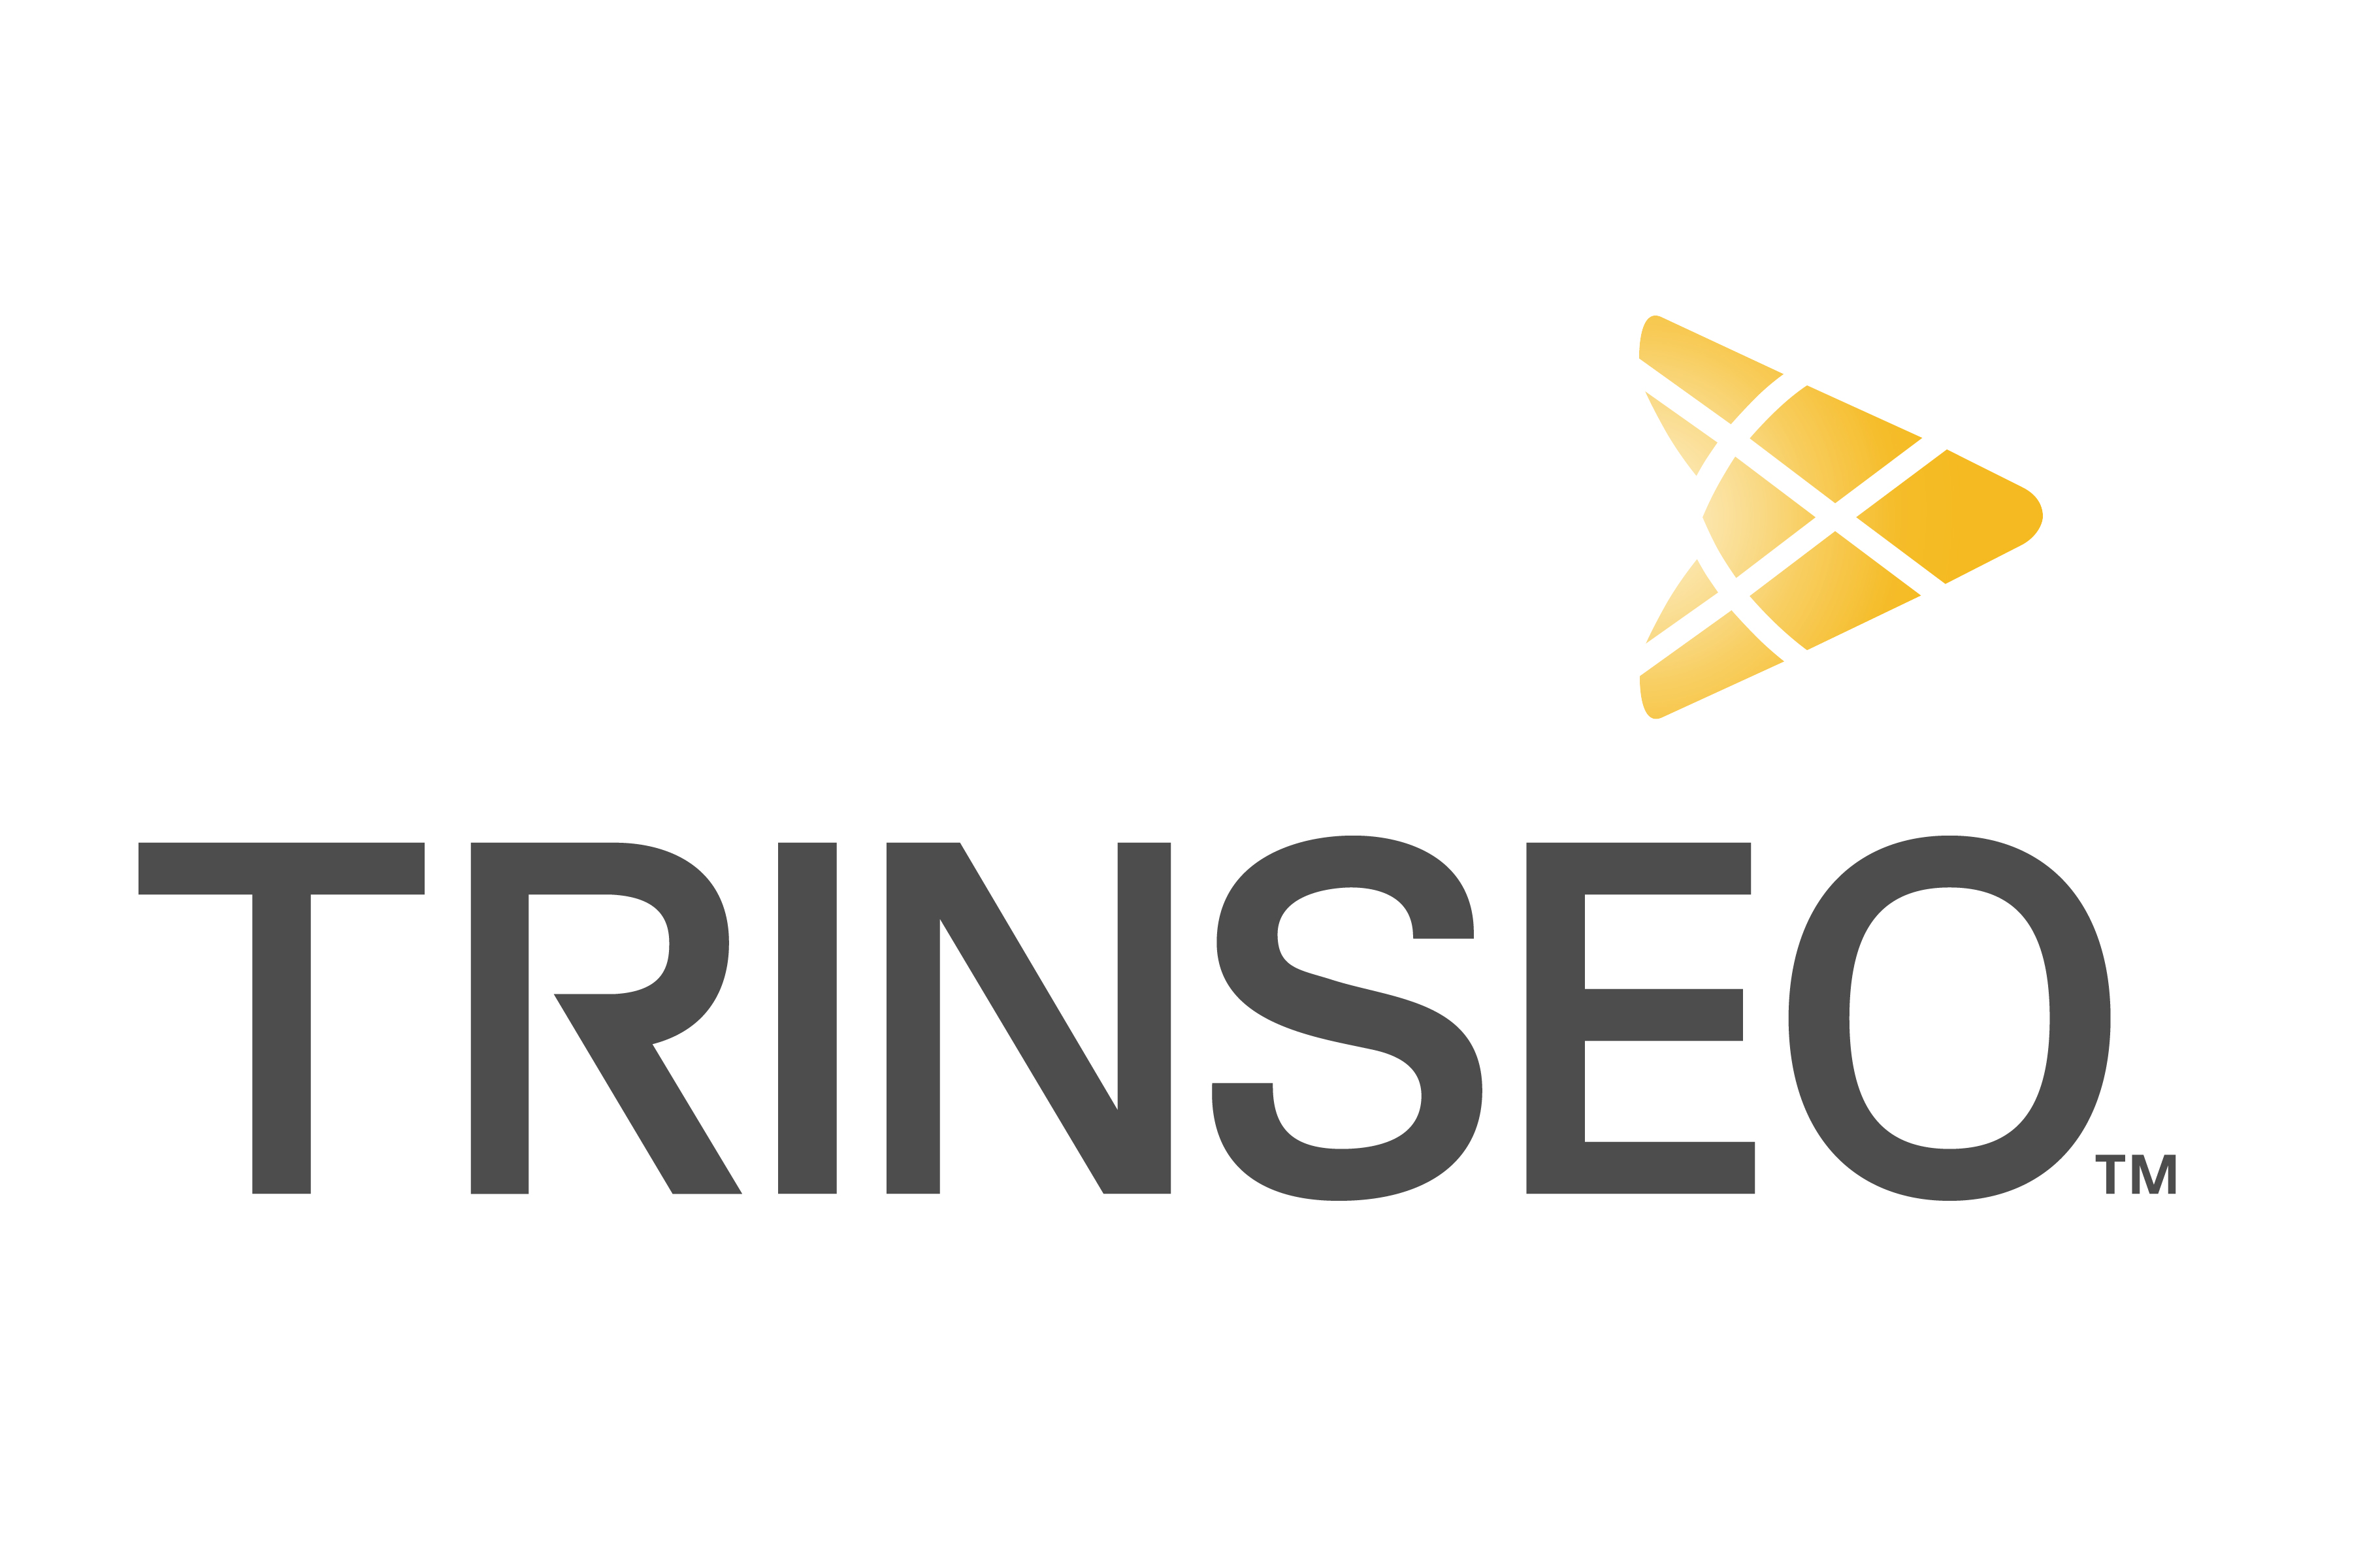 Trinseo Europe GmbH